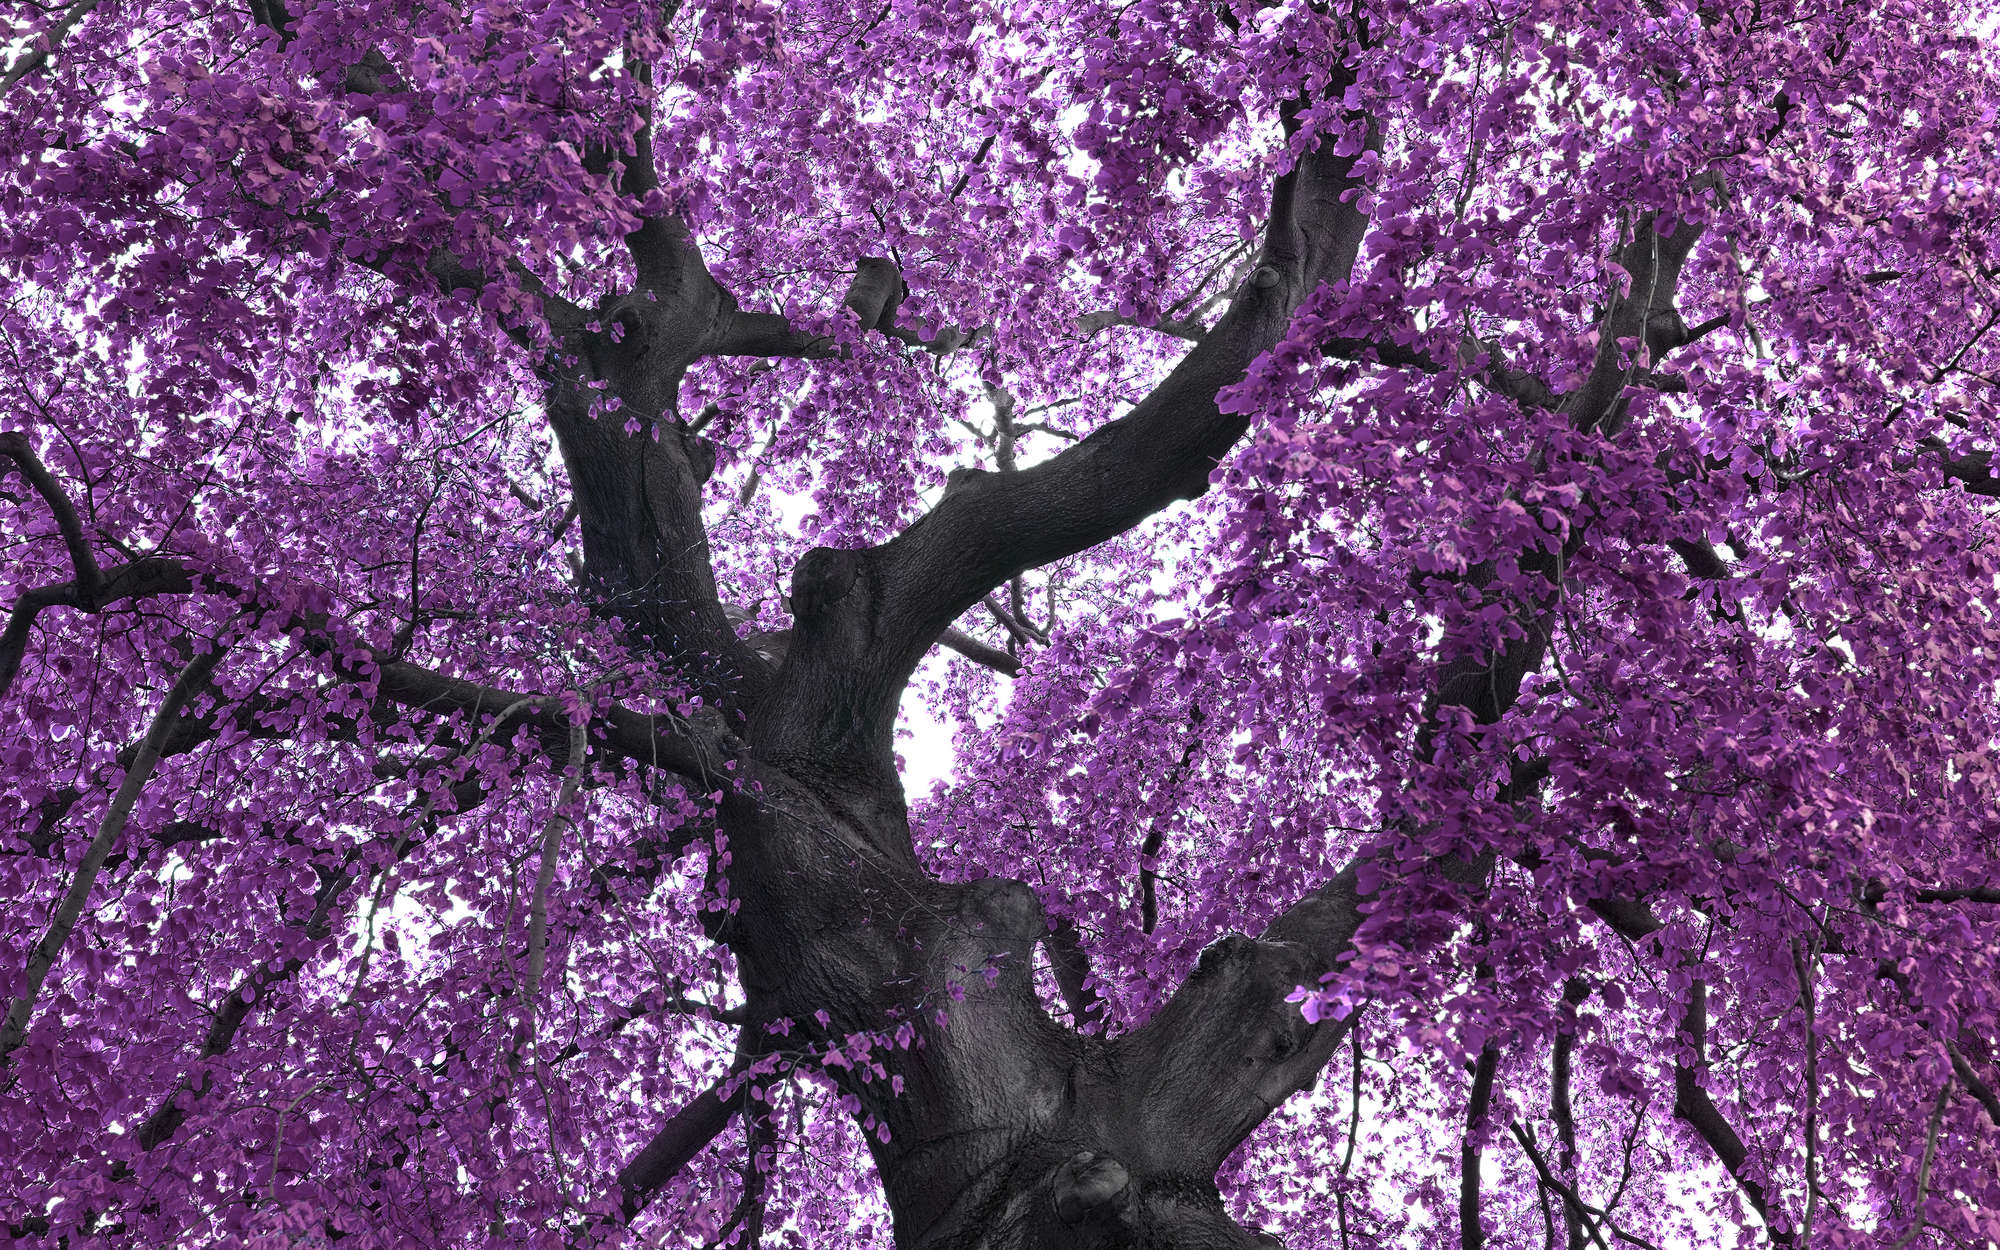             Fototapete Baum mit Lila Baumkrone – Premium Glattvlies
        